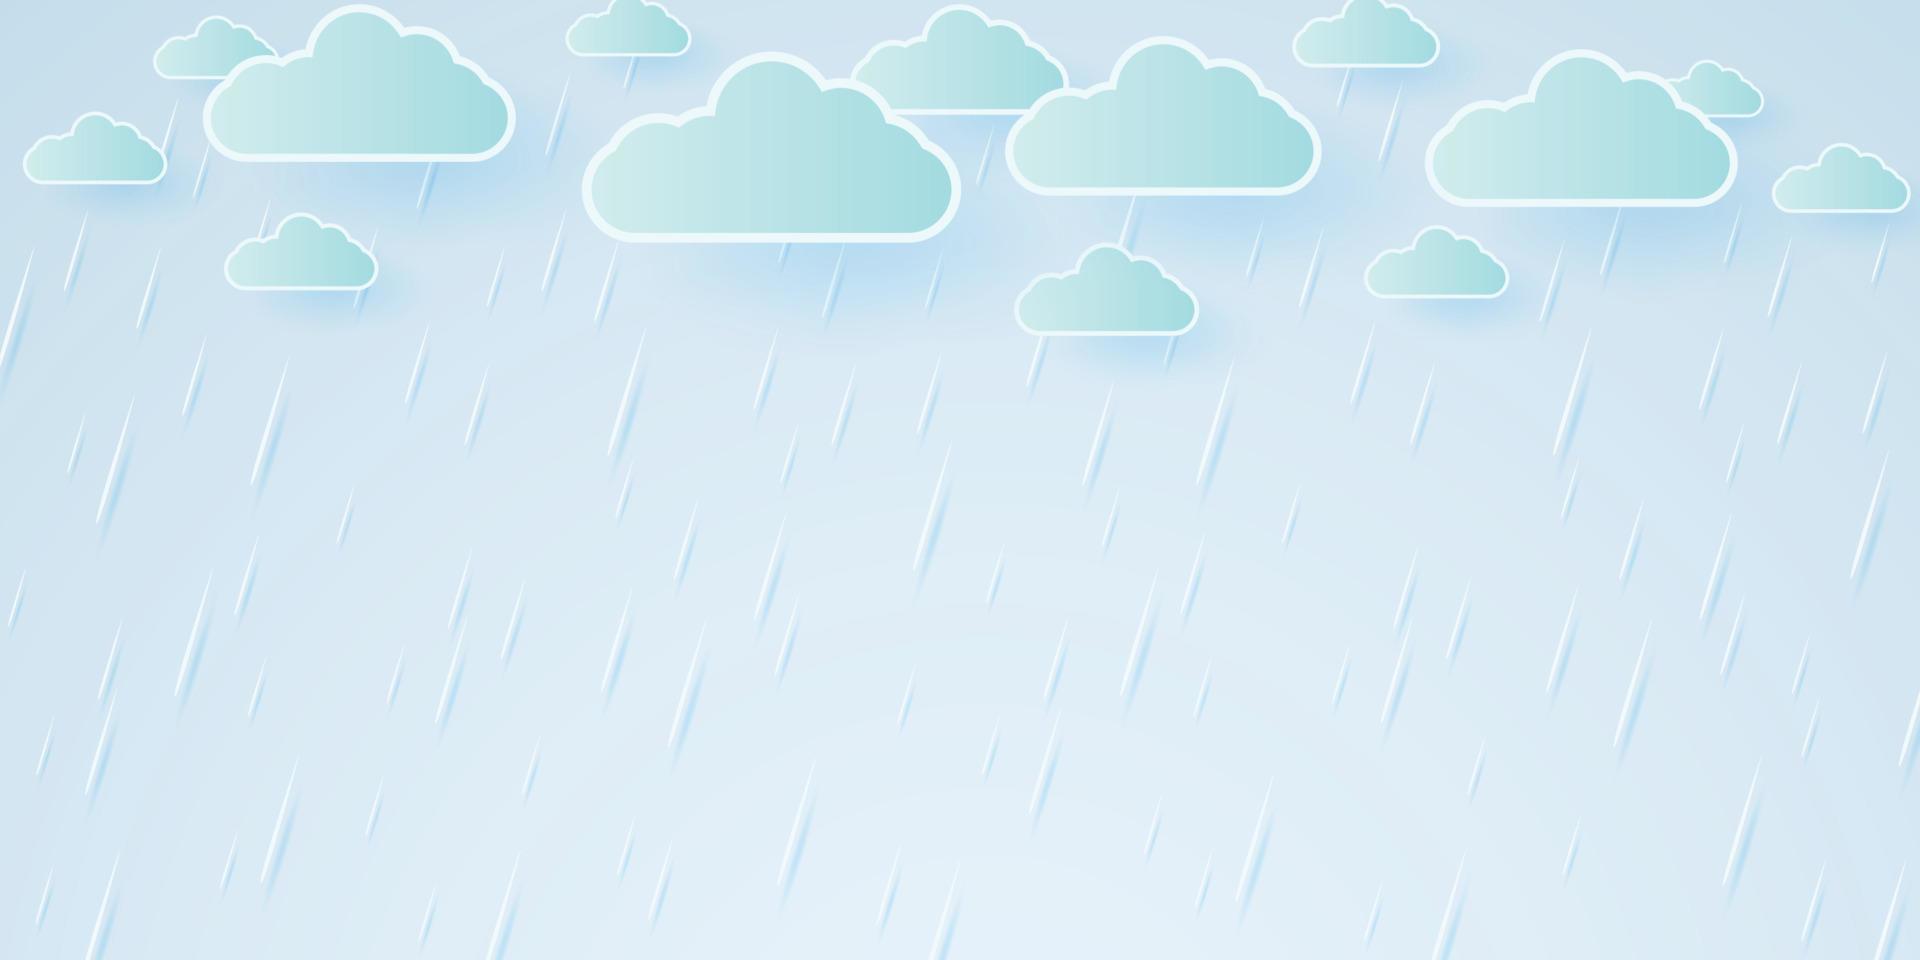 Vektorillustration, Regensturm, Regenhintergrund, Regenzeit, Papierkunststil vektor